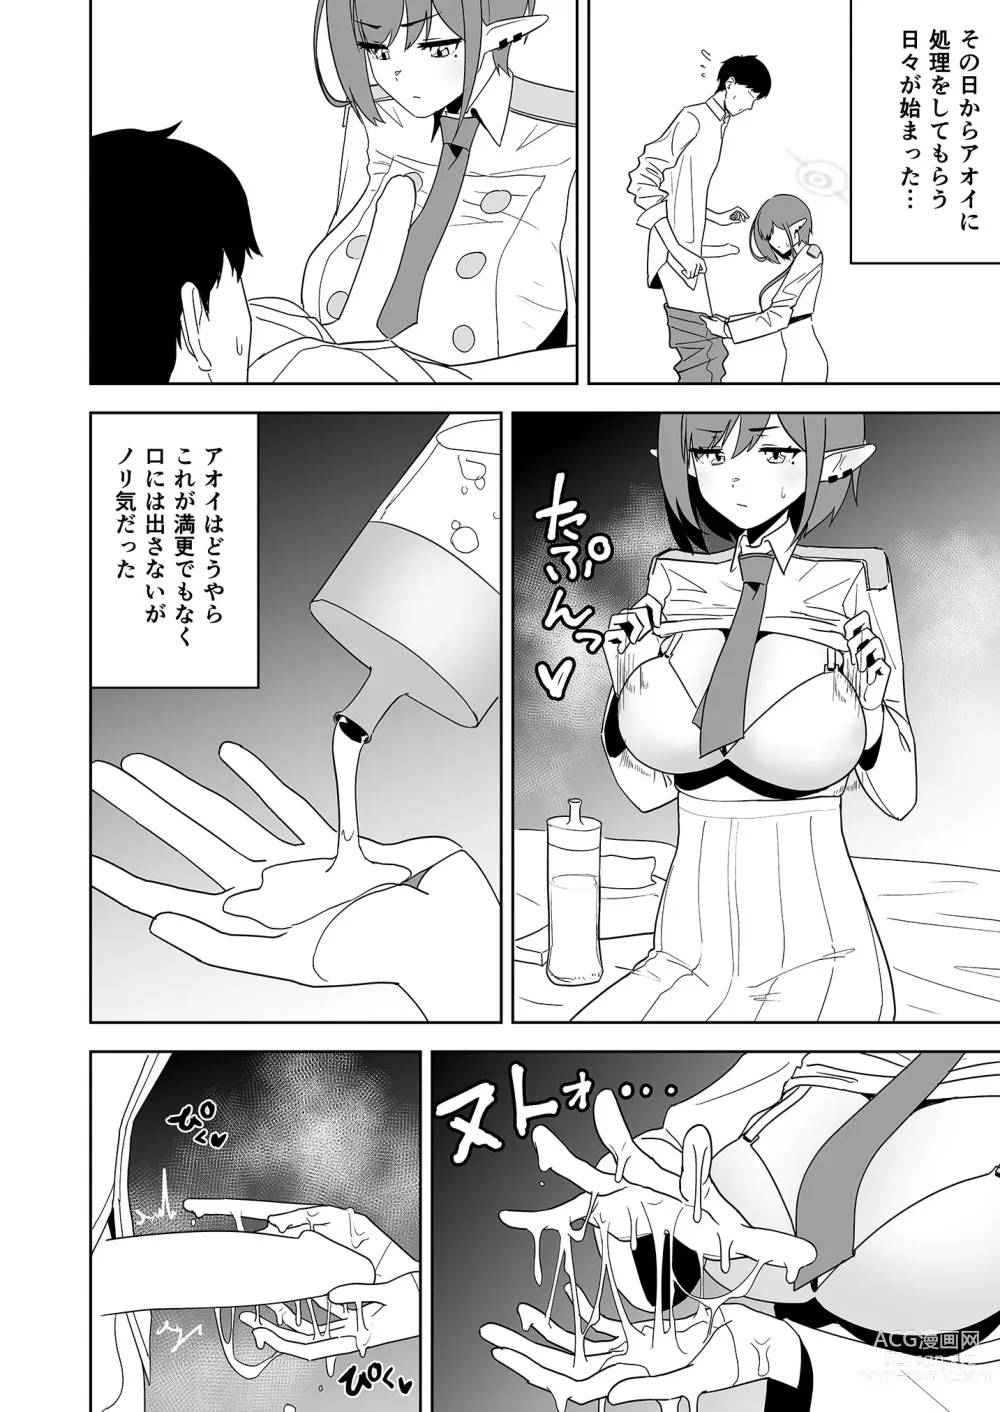 Page 7 of doujinshi Aoi ni Tekoki Shite Moraou - Lets Aoi give you a hand job.